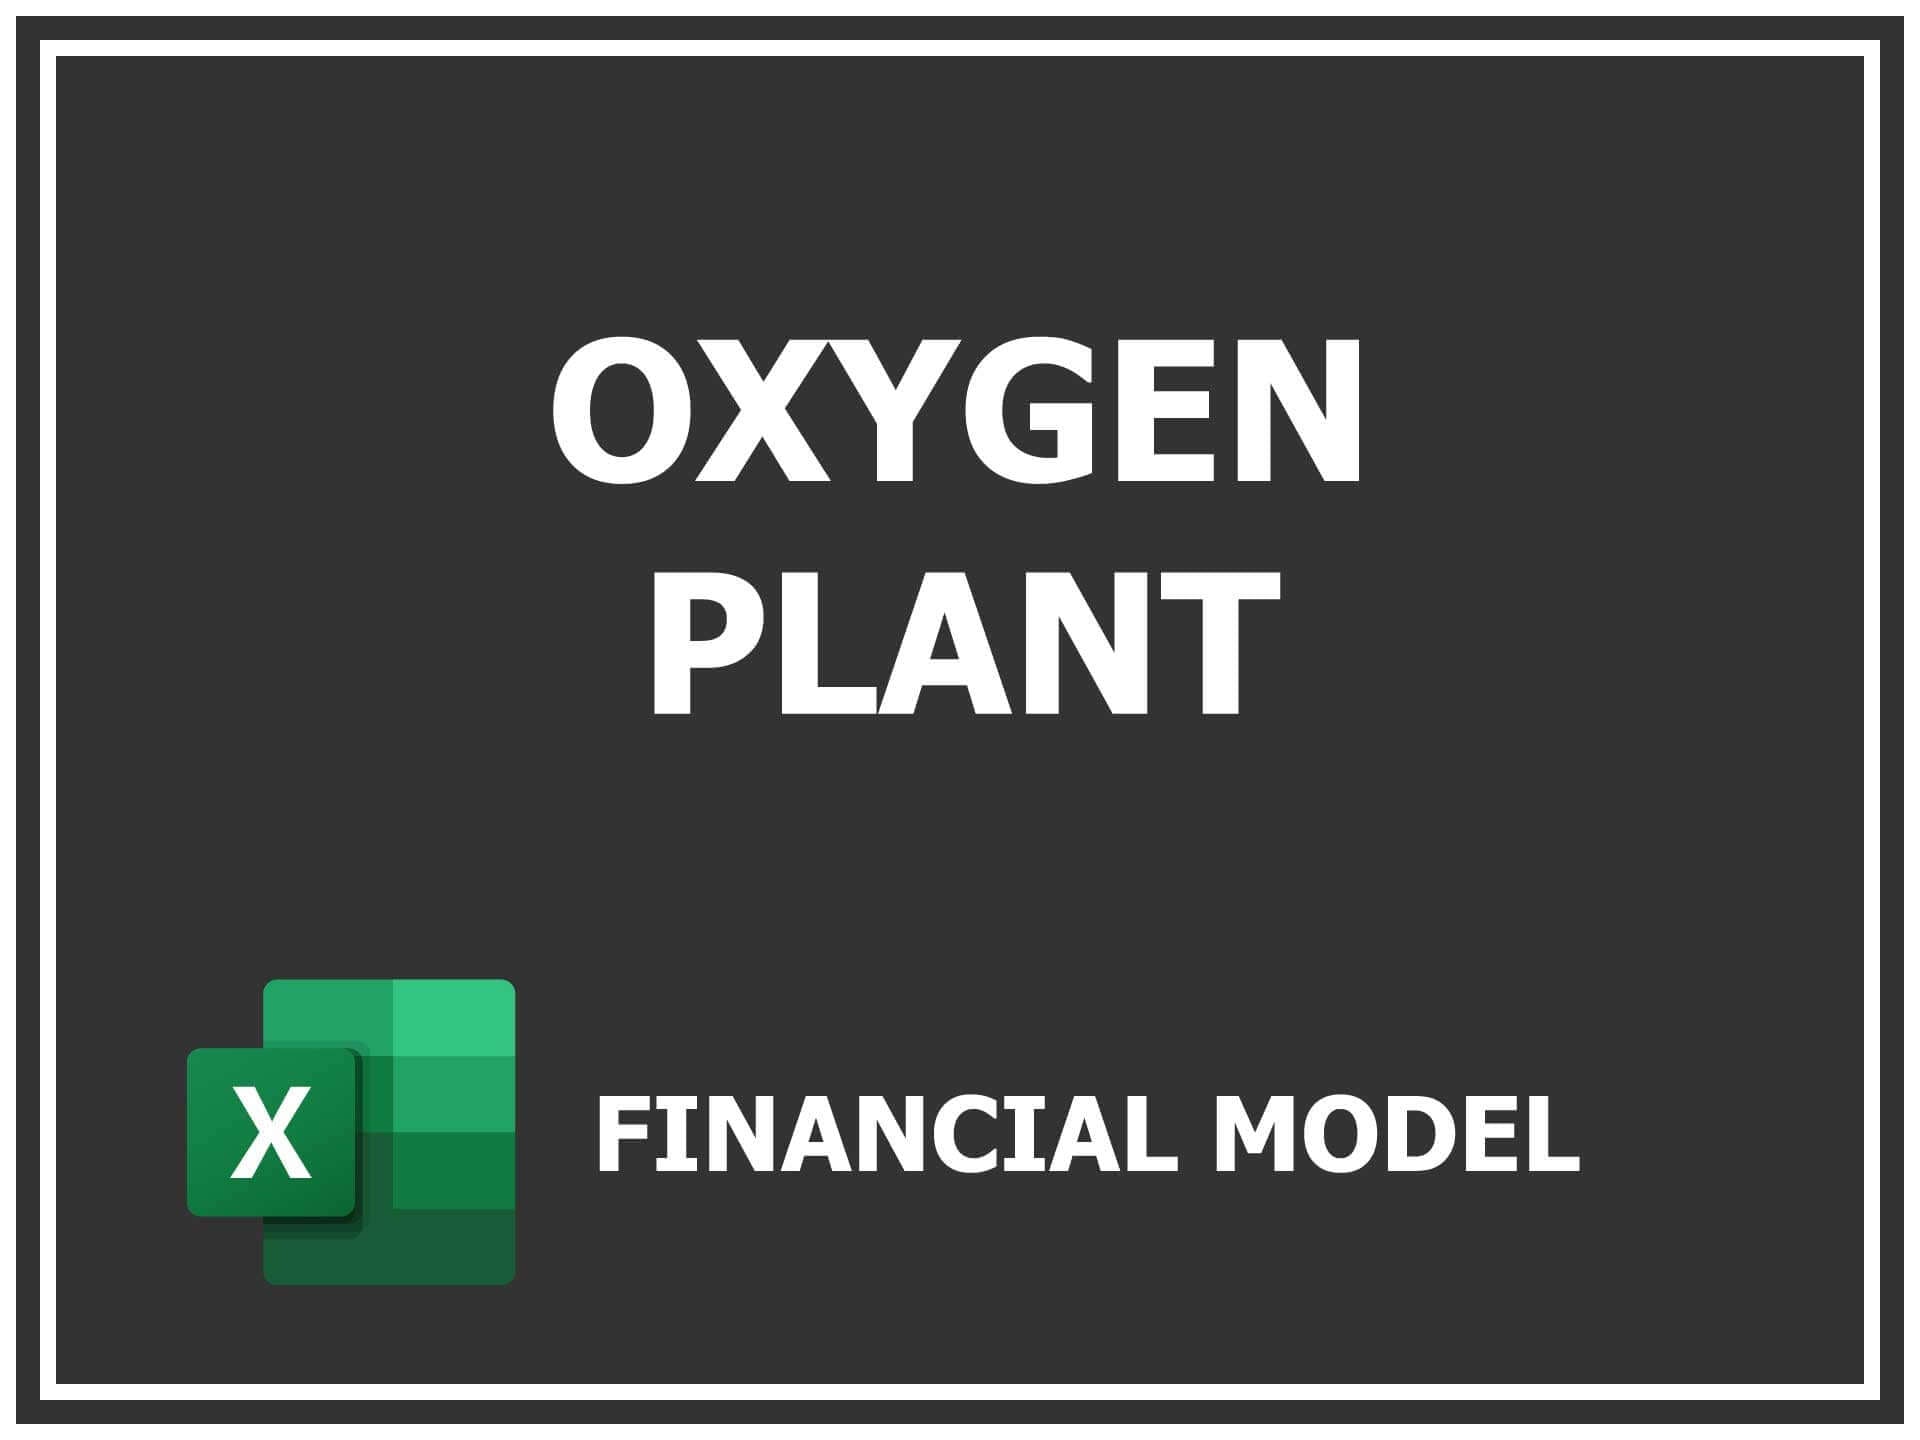 Oxygen Plant